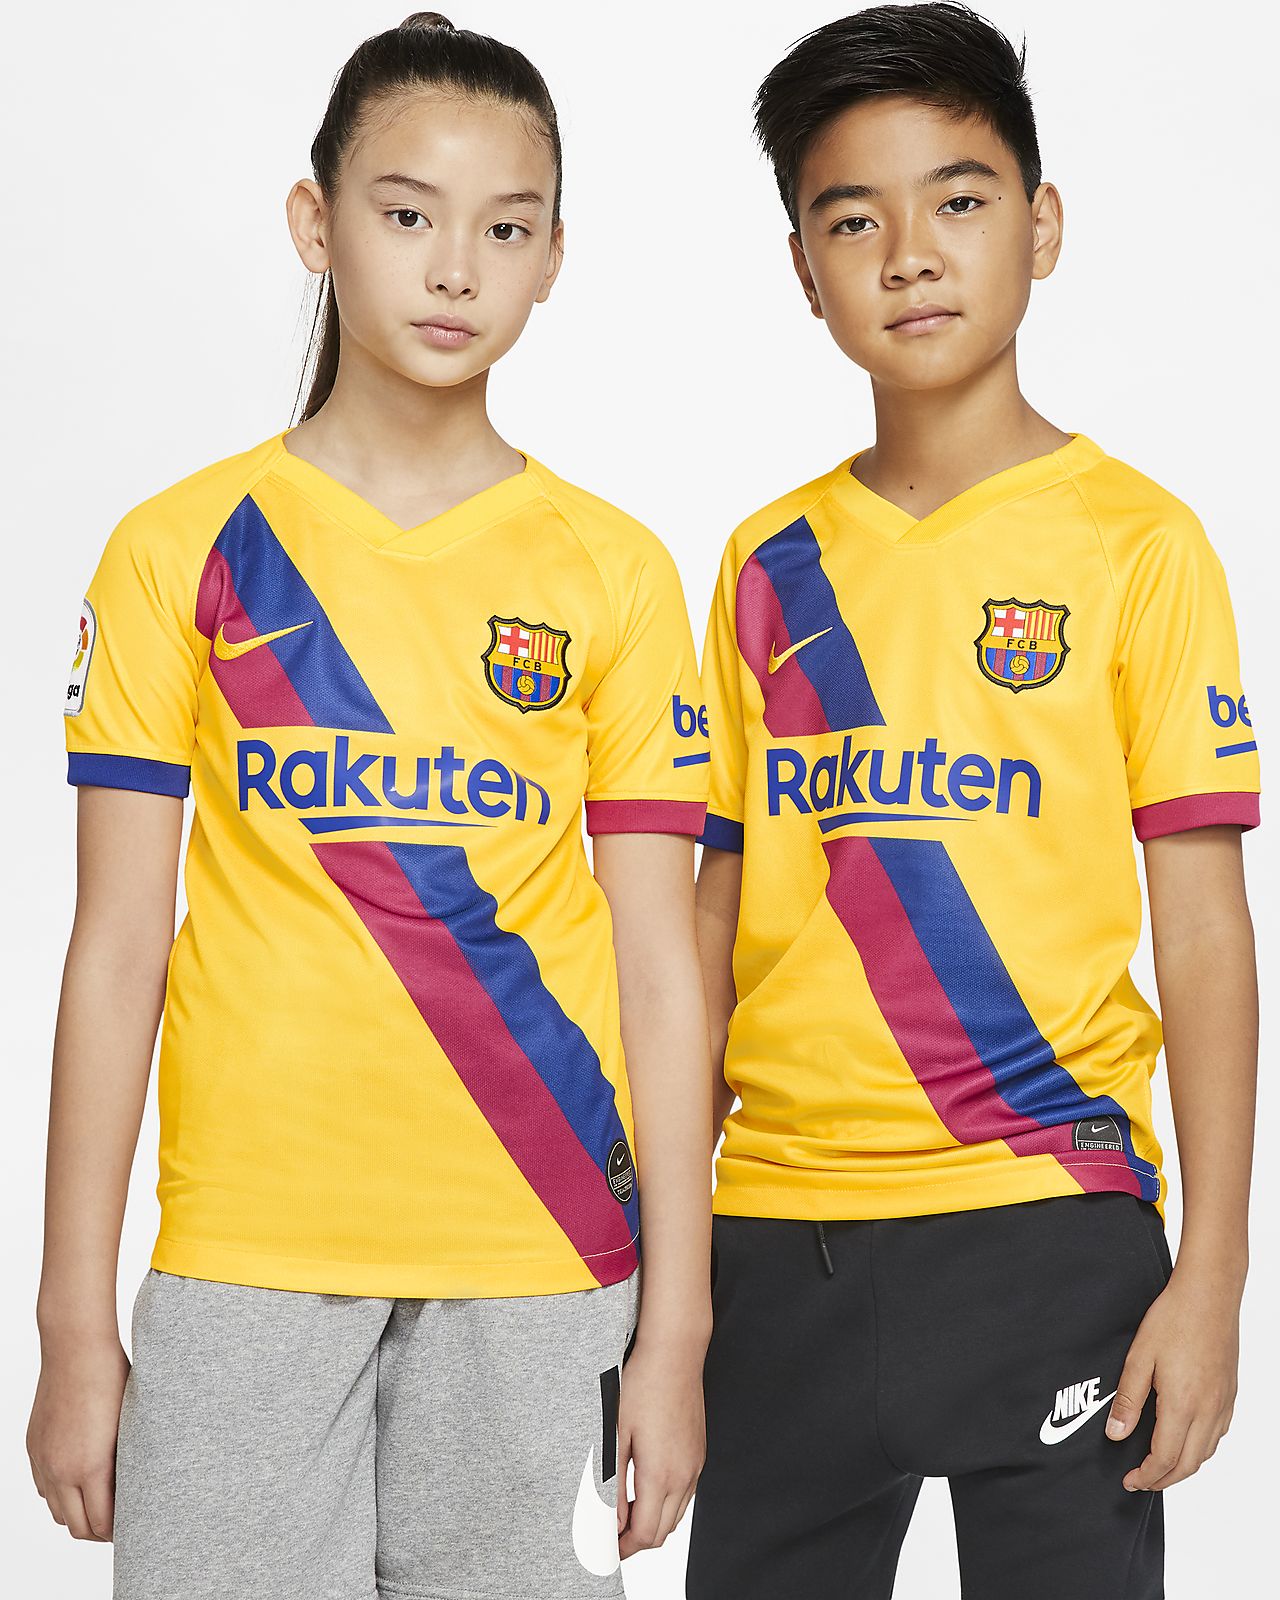 barcelona kids jersey